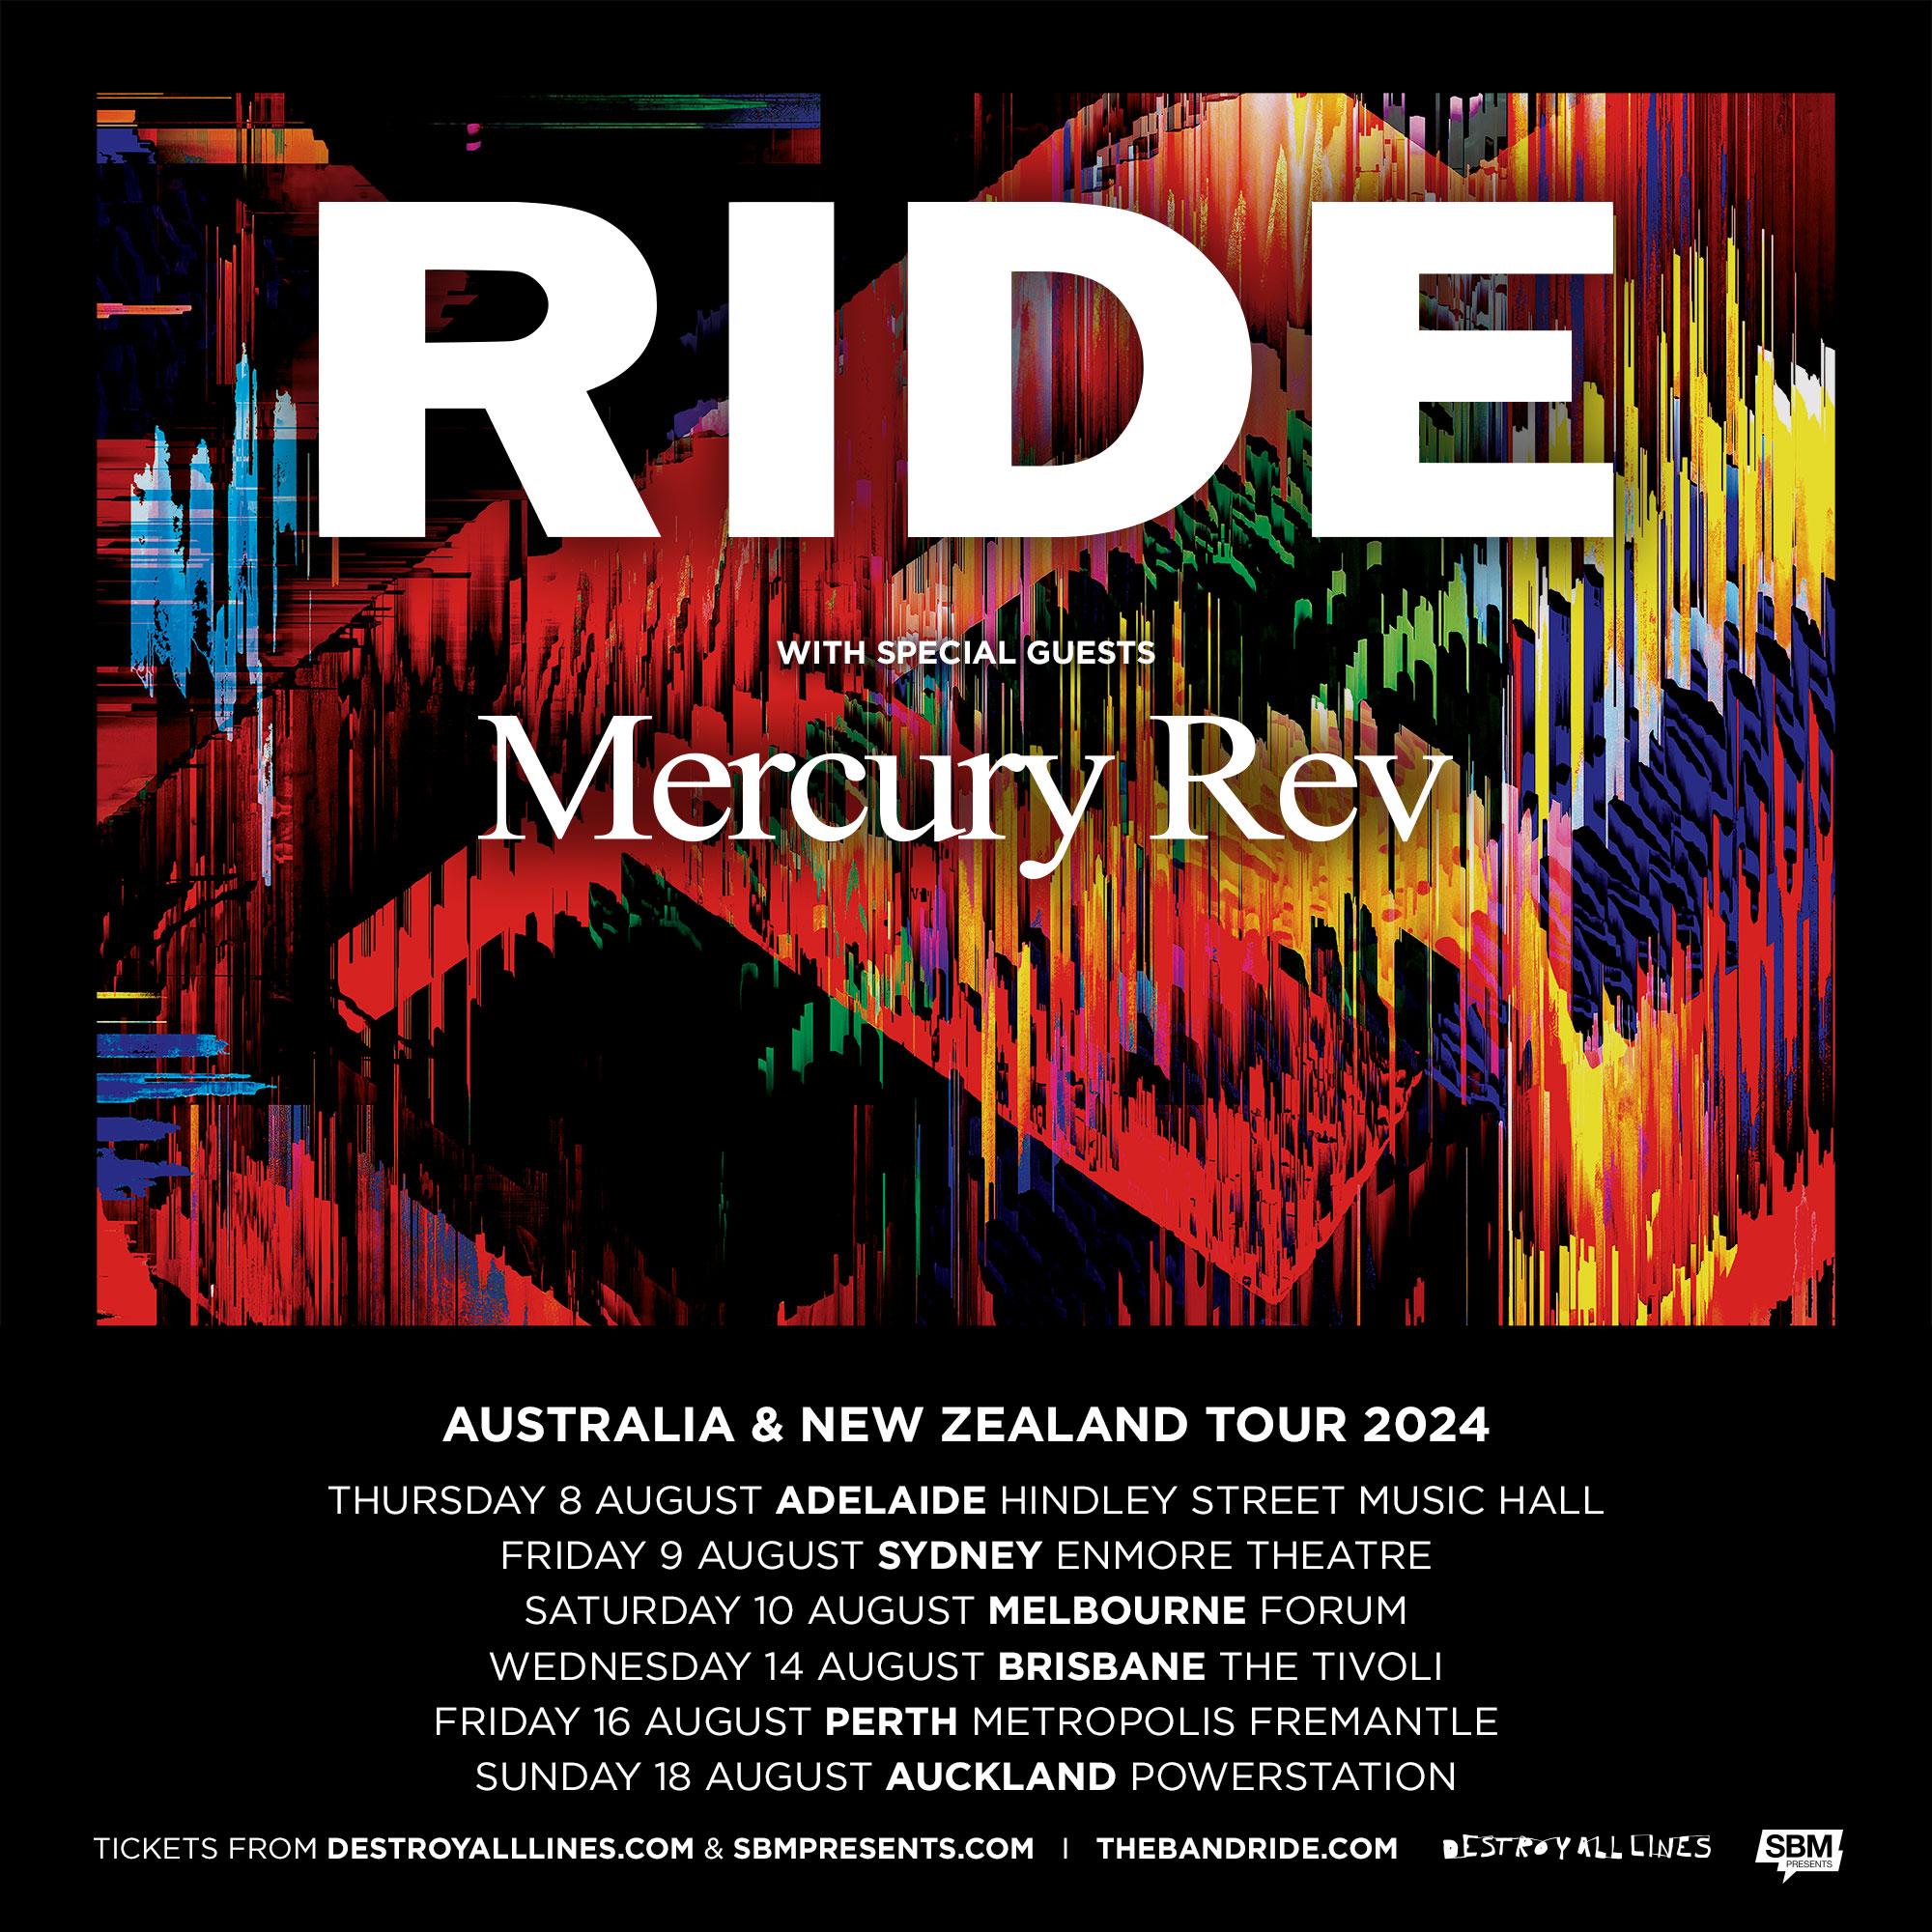 Mercury Rev - New Album Coming Soon!